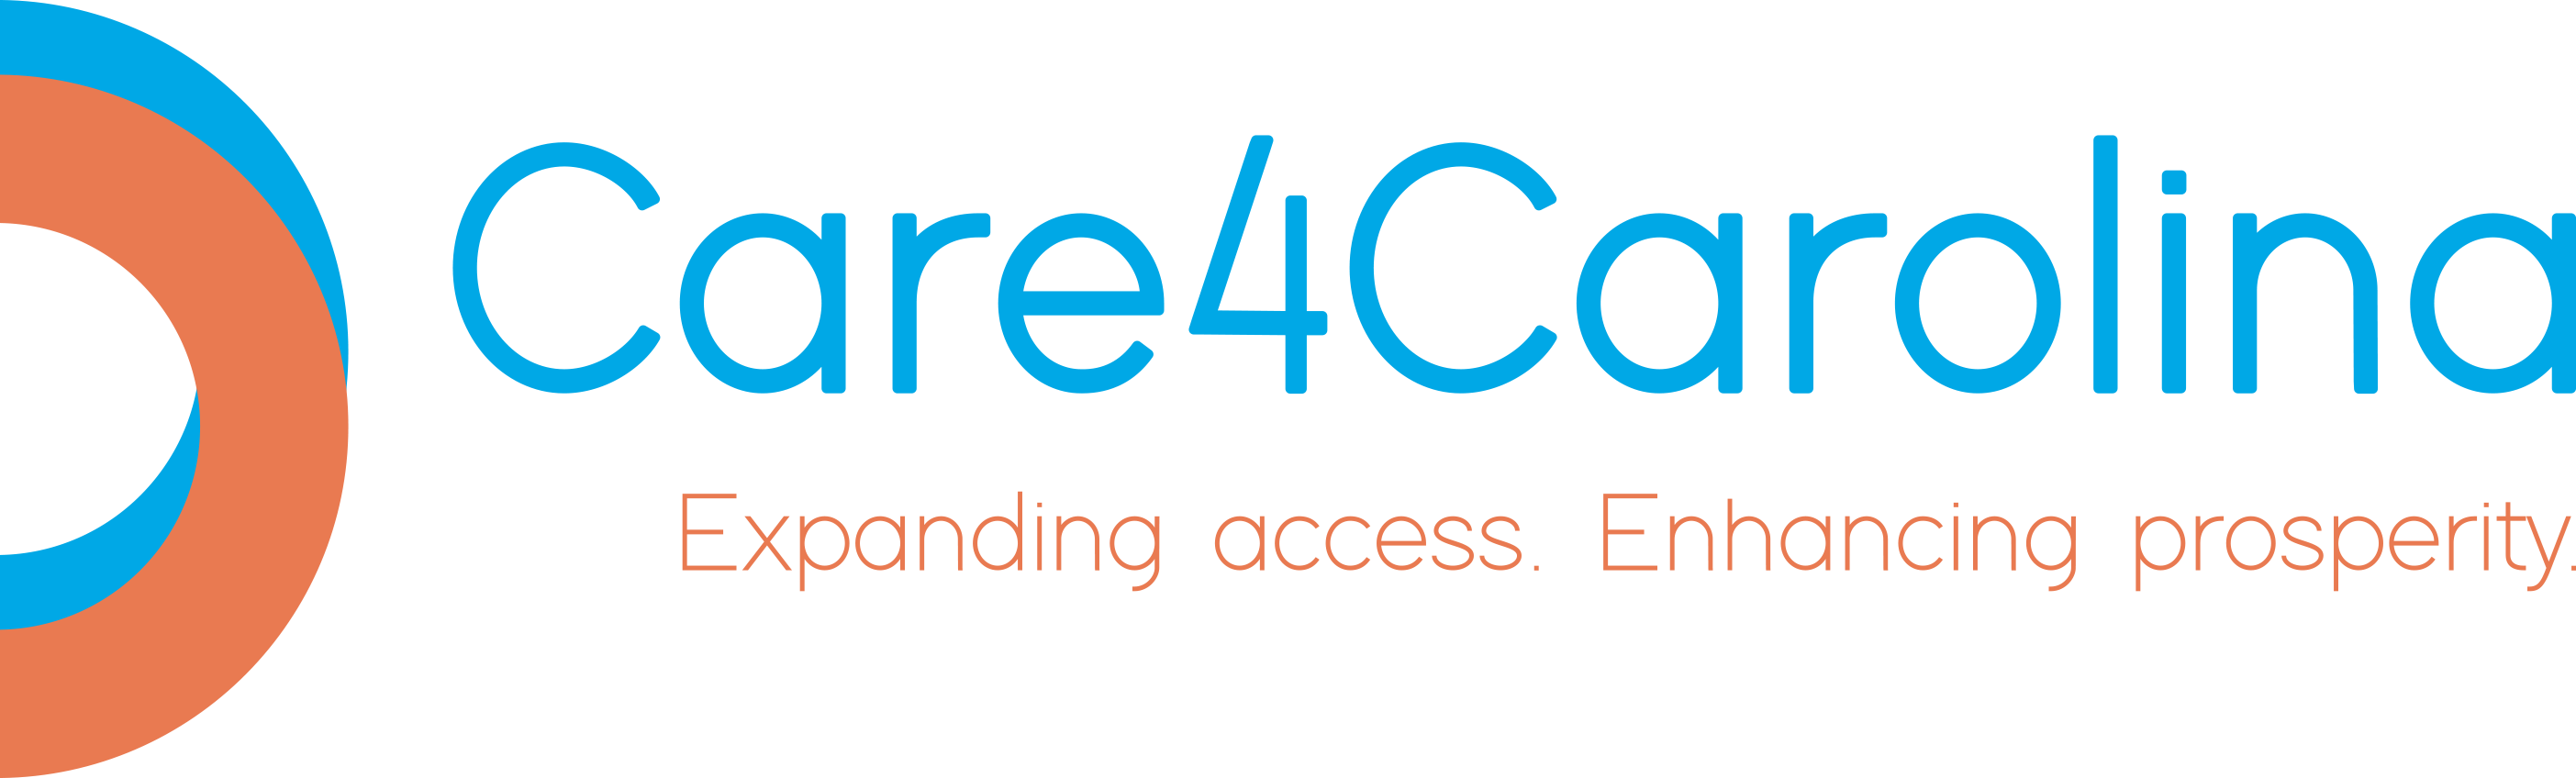 Care4Carolina logo